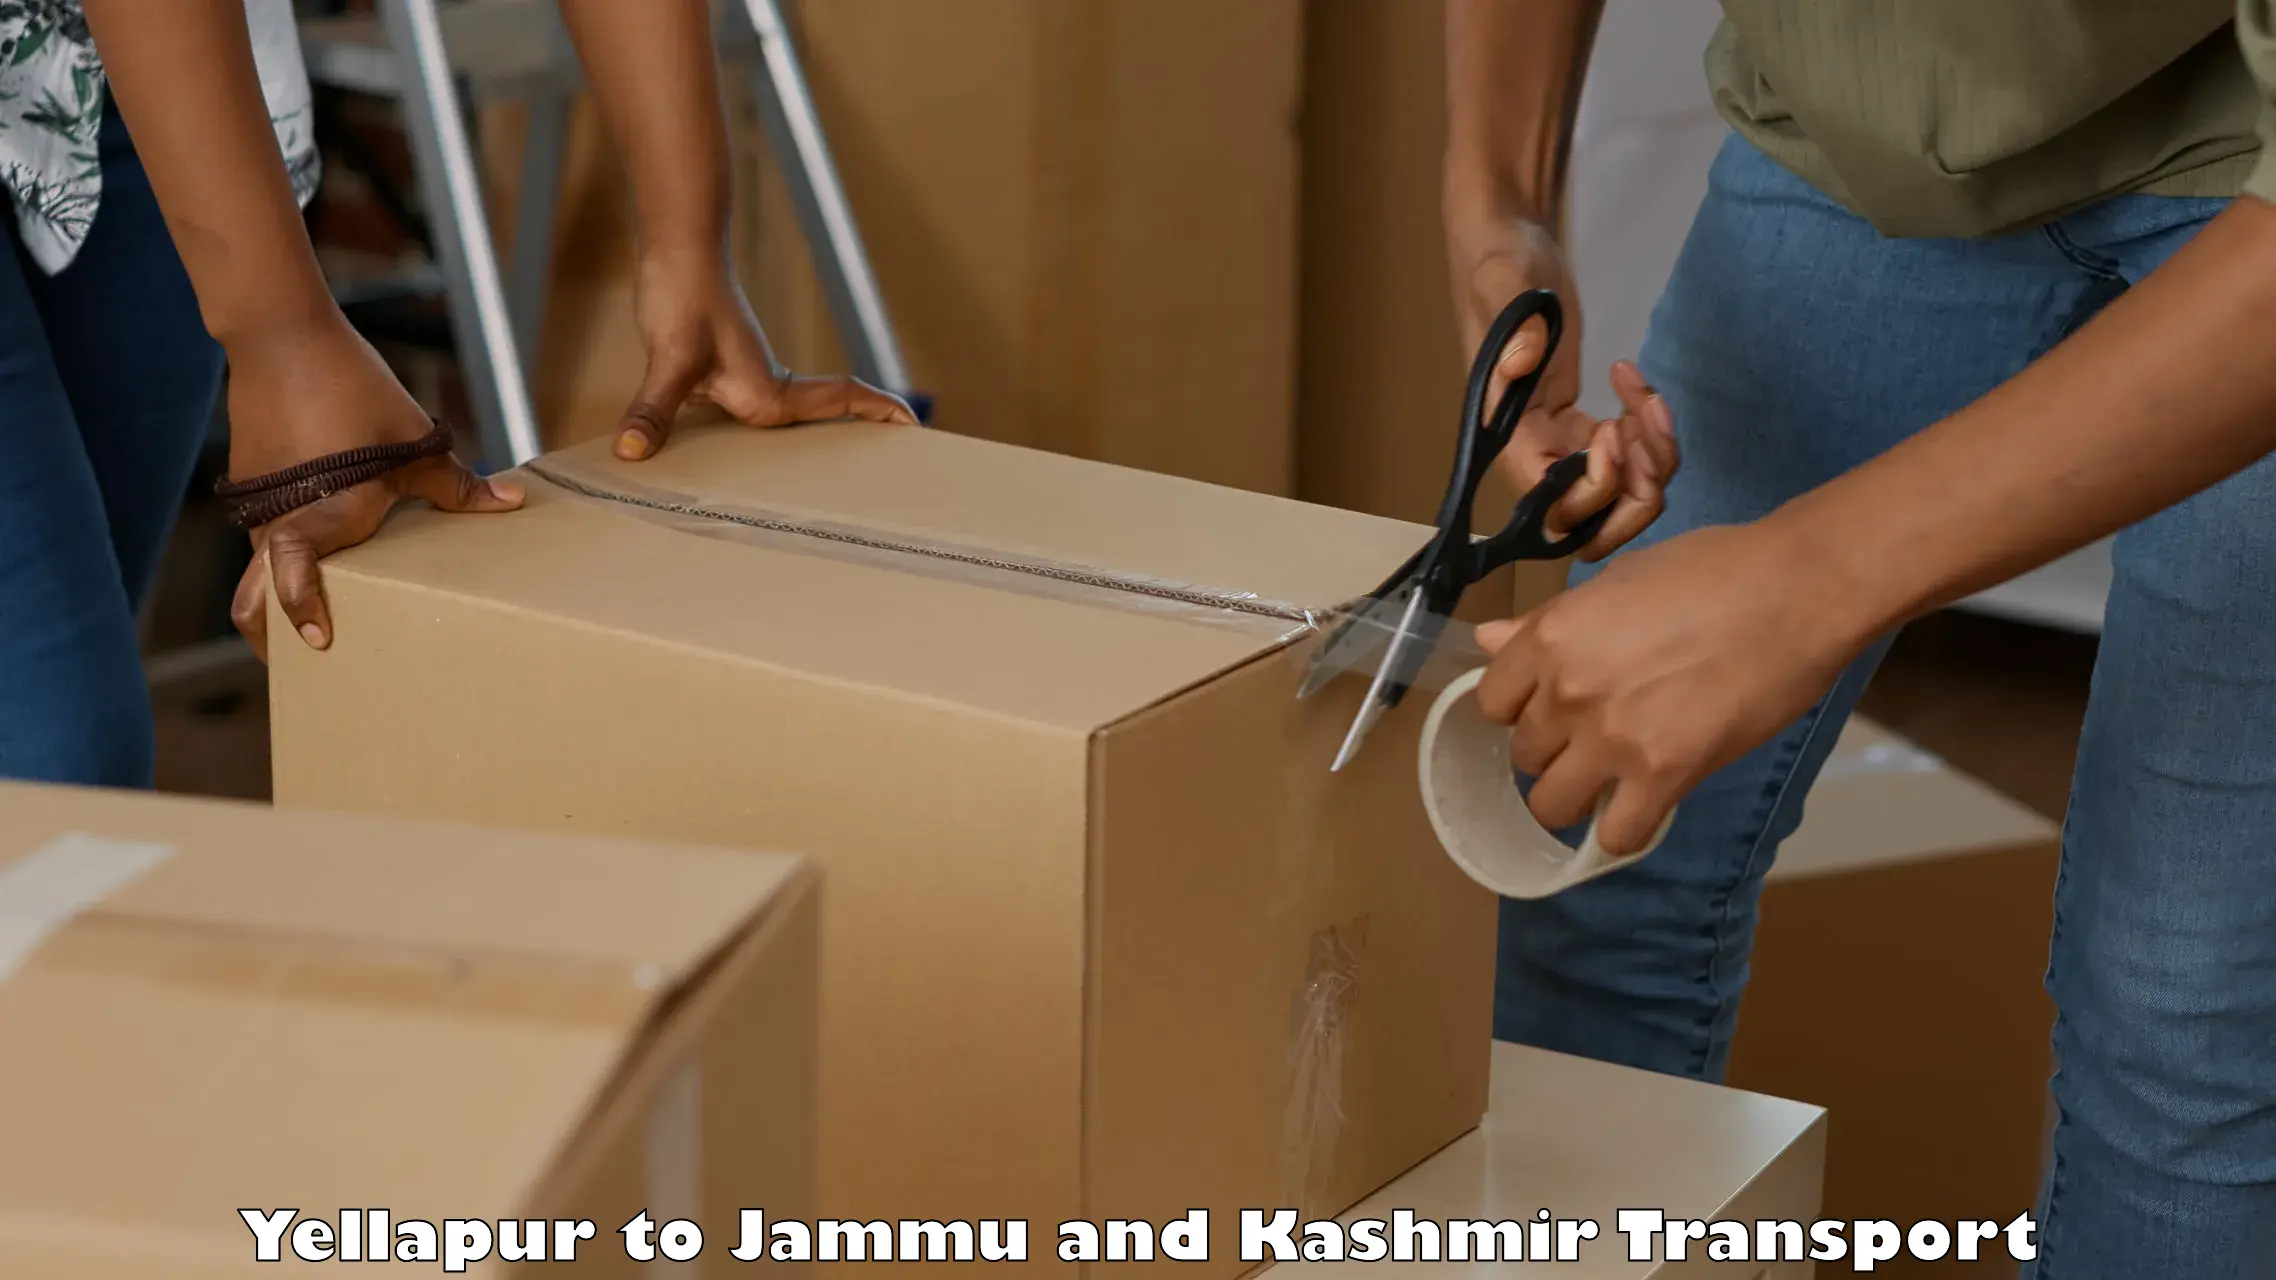 Furniture transport service in Yellapur to Jammu and Kashmir